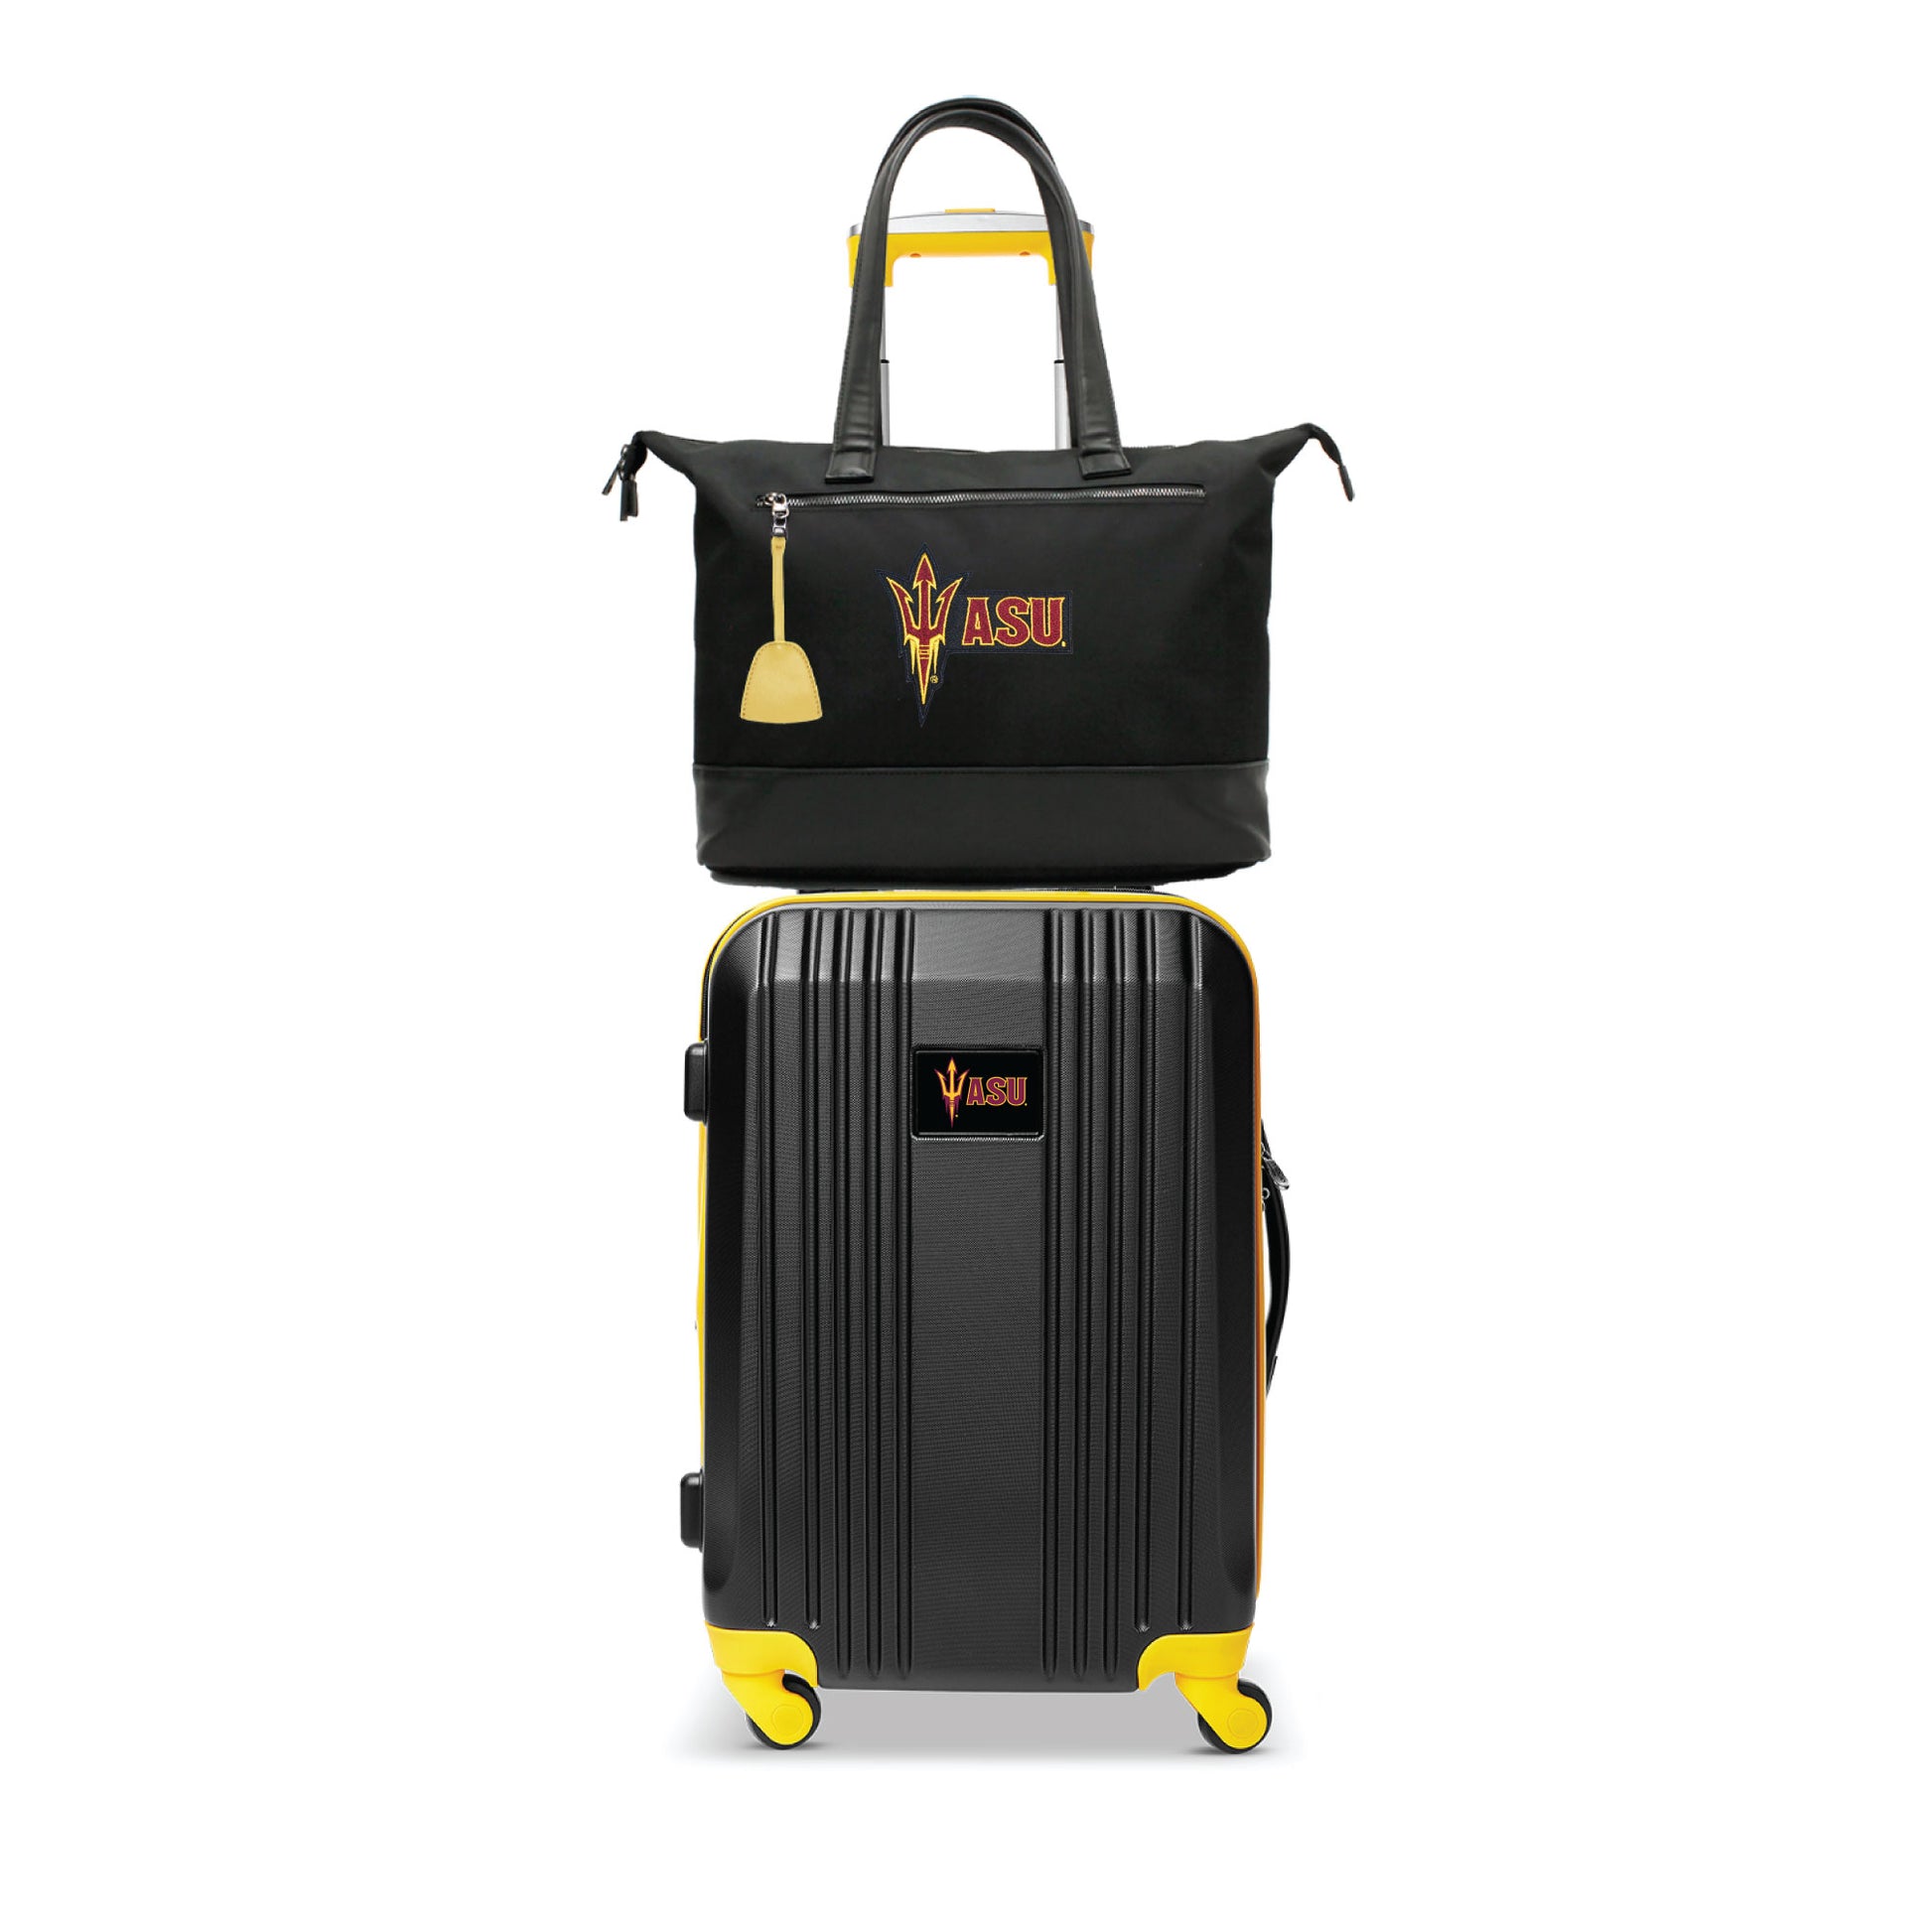 Arizona State Sun Devils Premium Laptop Tote Bag and Luggage Set